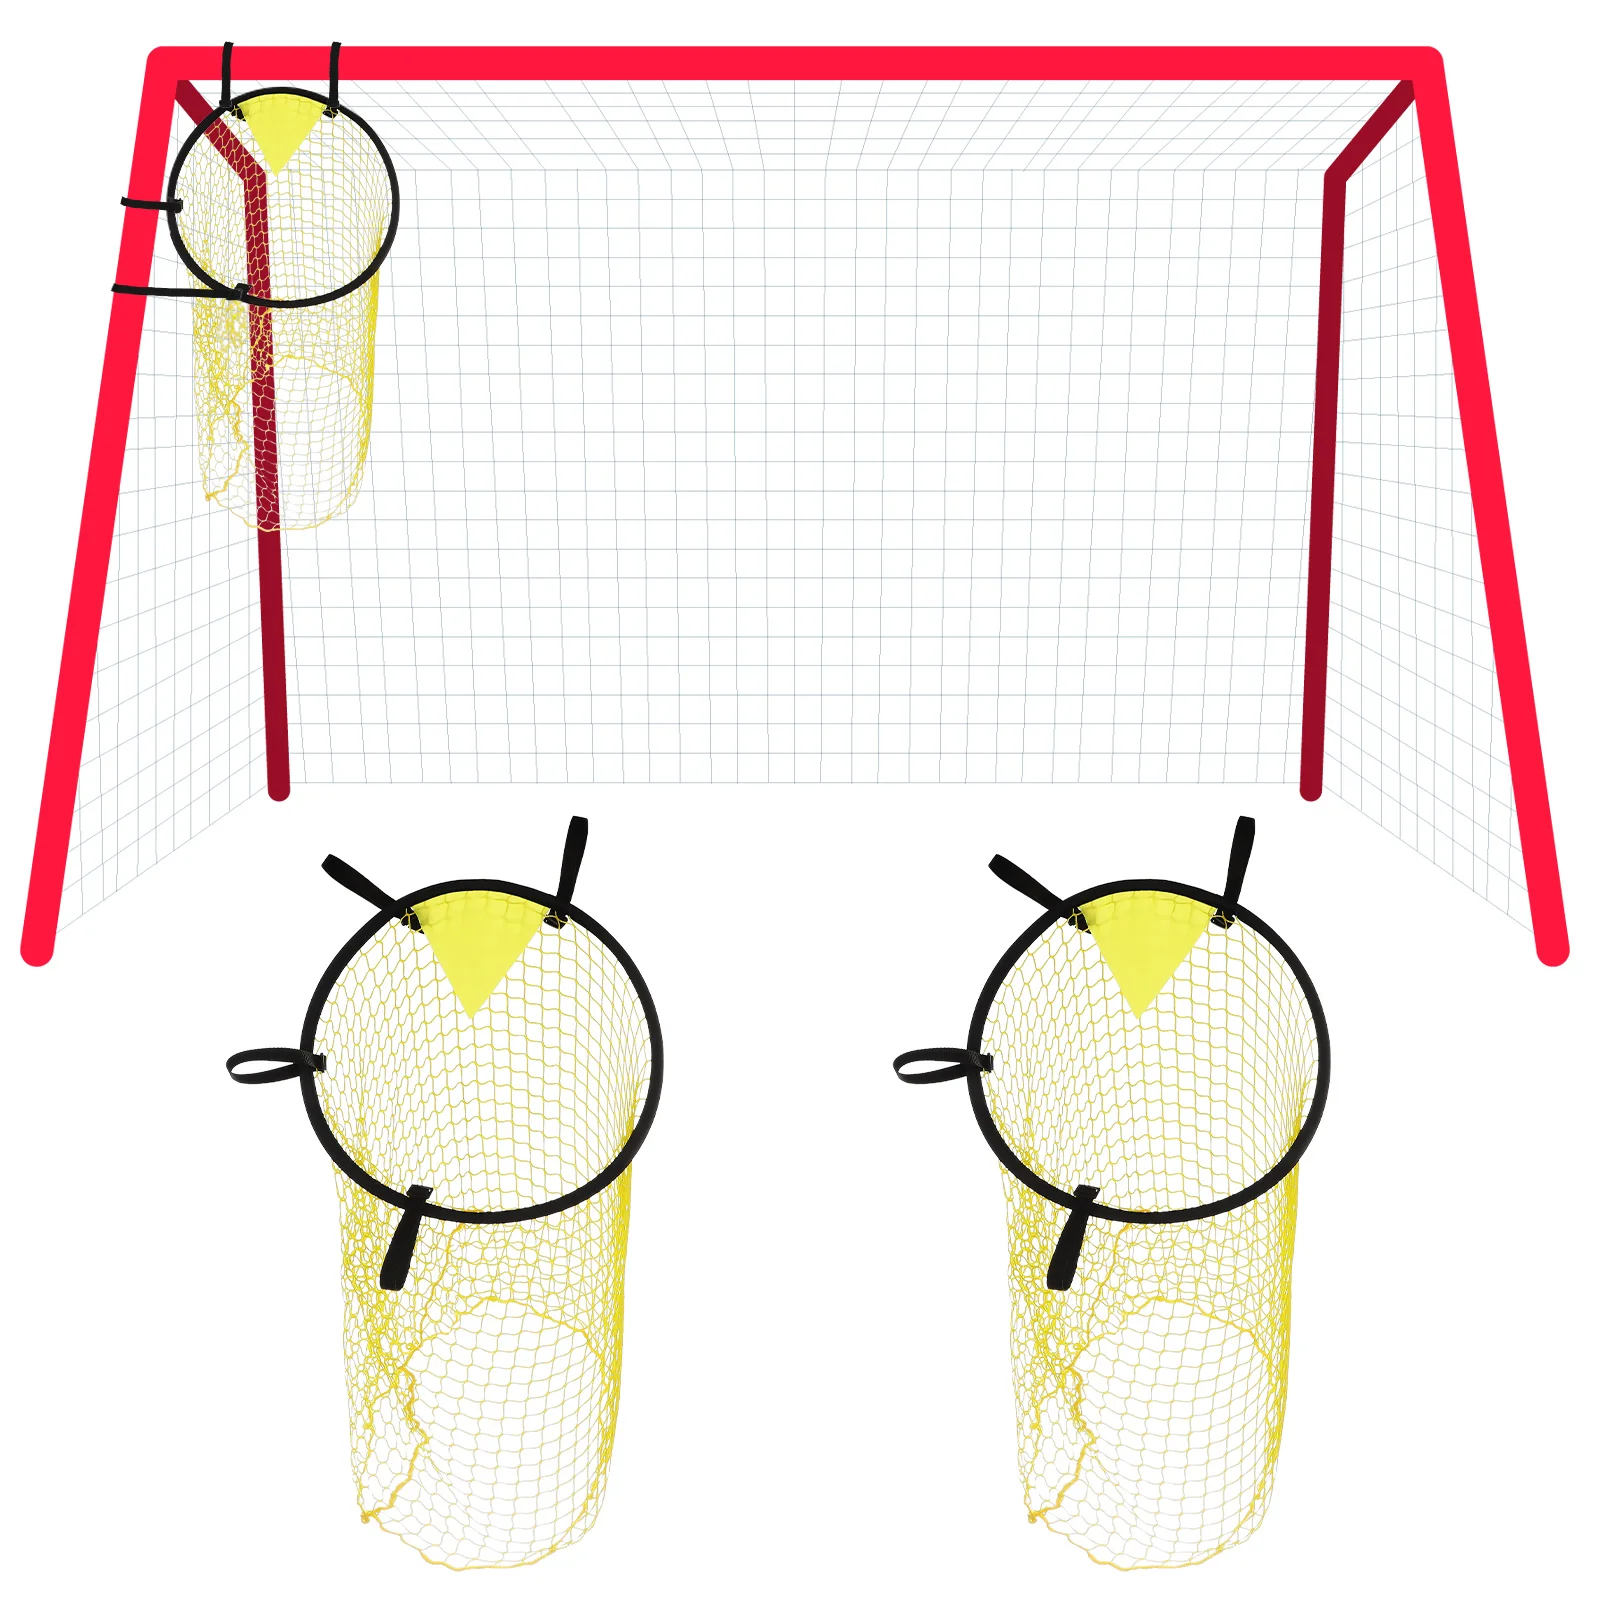 

2 Pcs Soccer Balls Balls Football Goal Pocket Indoor Net Practice Training Equipment Nets Child